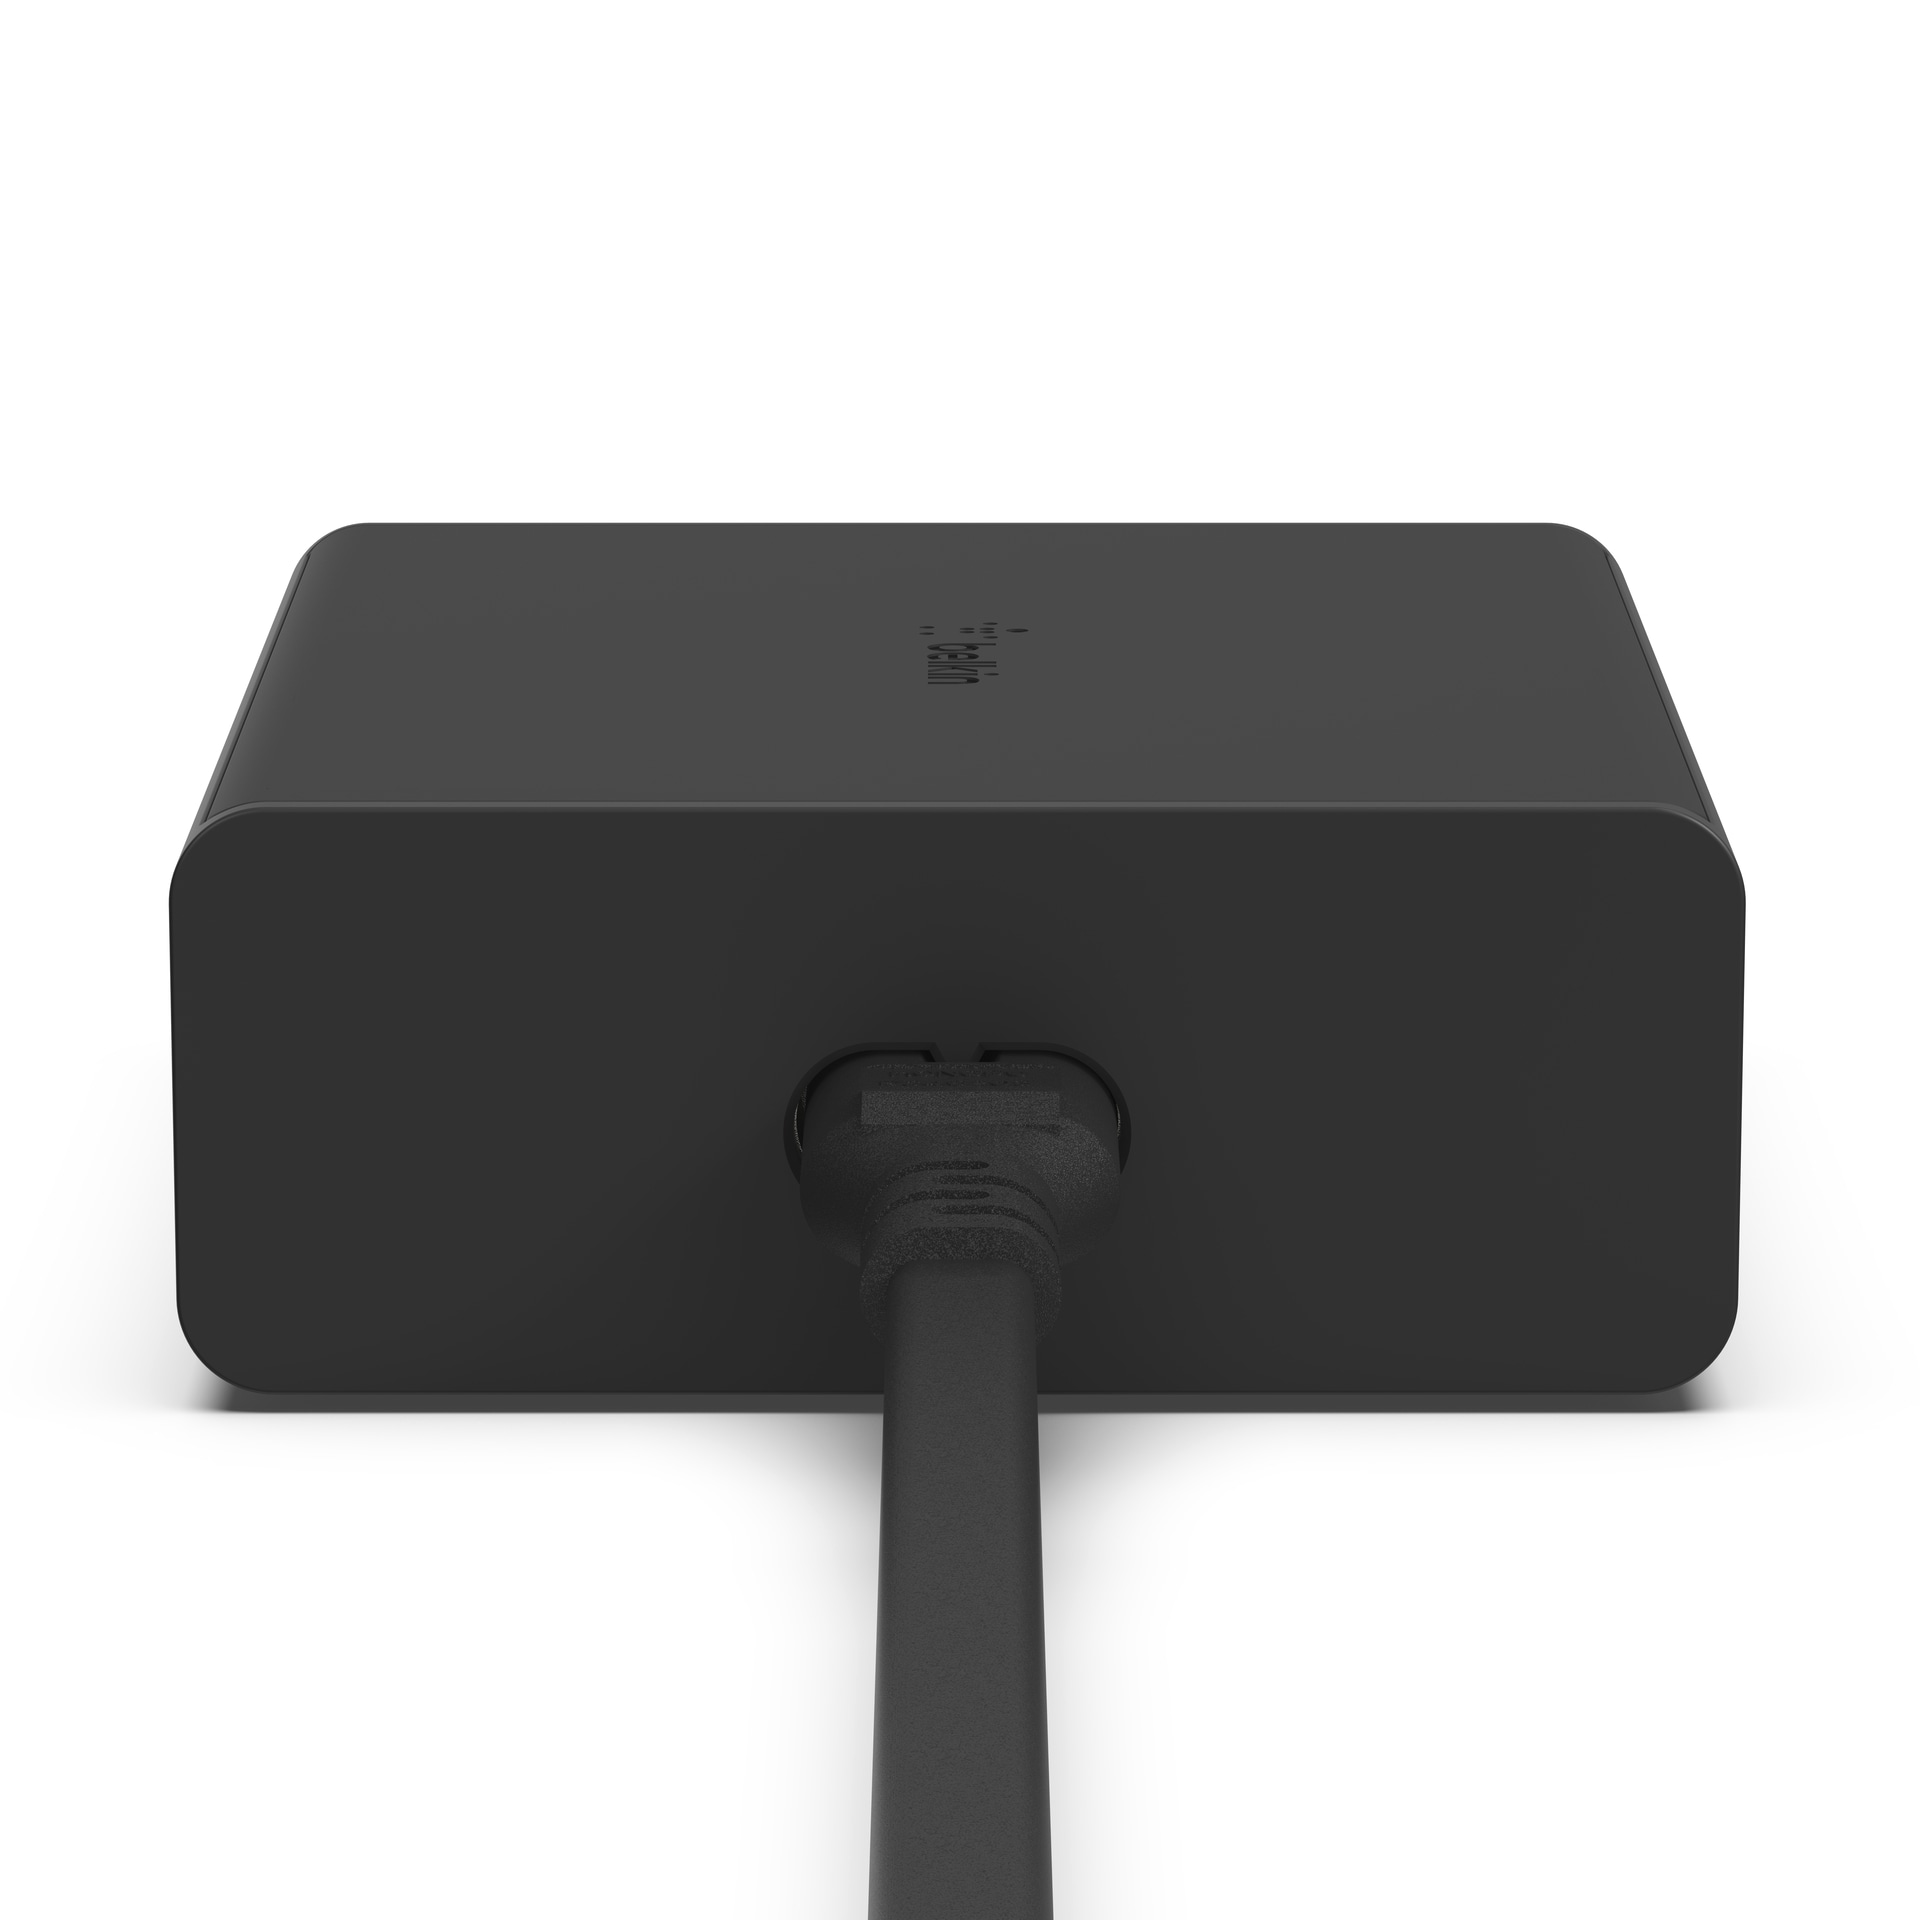 Belkin USB-Ladegerät »BoostCharge Pro 108 Watt 4-Port GaN Ladegerät/Charger«, mit 2x USB-C und 2x USB-A (Netzteil für Laptops, Tablets, Smartphones)